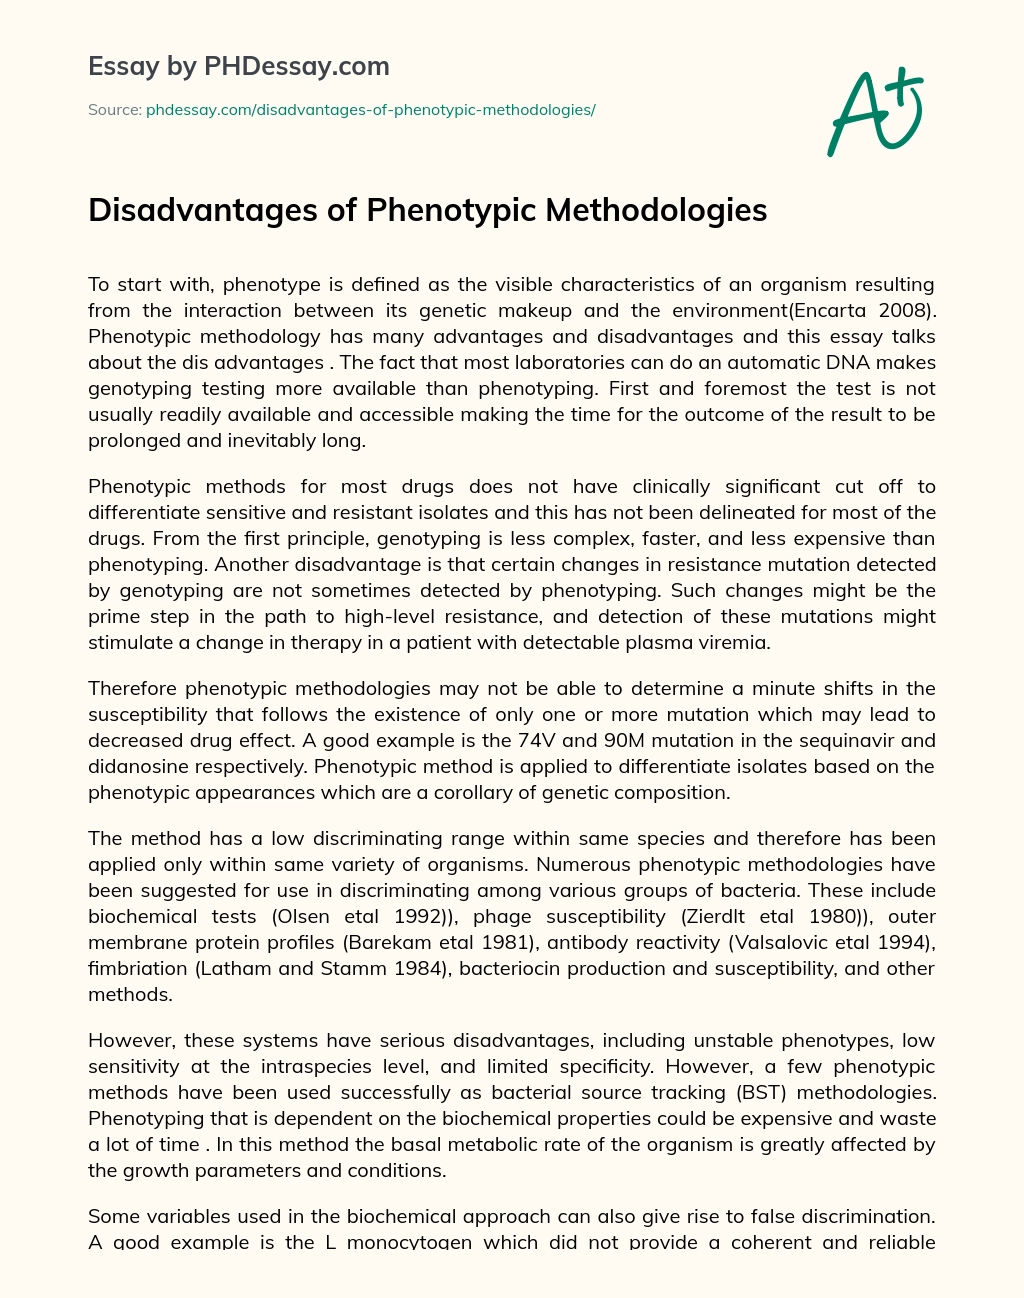 Disadvantages of Phenotypic Methodologies essay